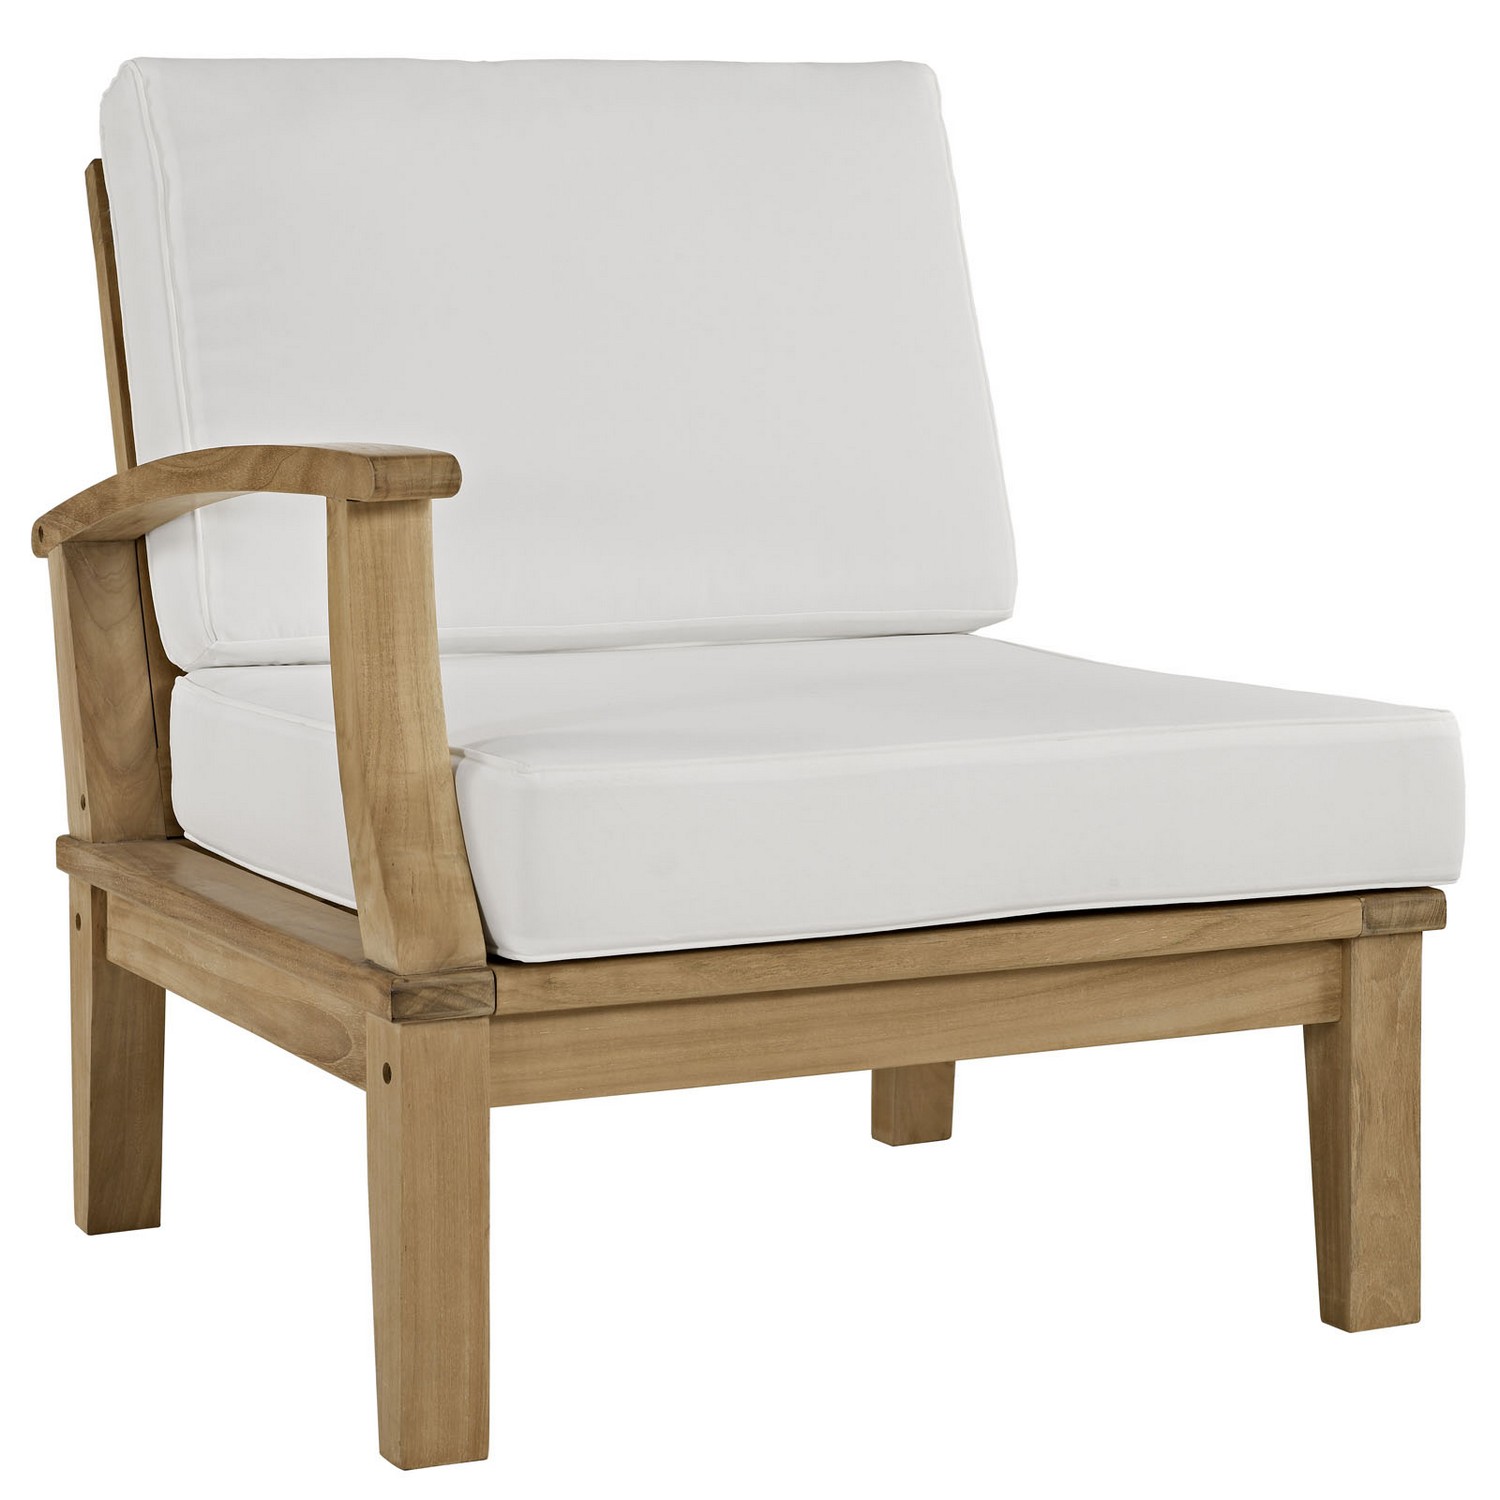 Modway Marina 8 Piece Outdoor Patio Teak Sofa Set - Natural White